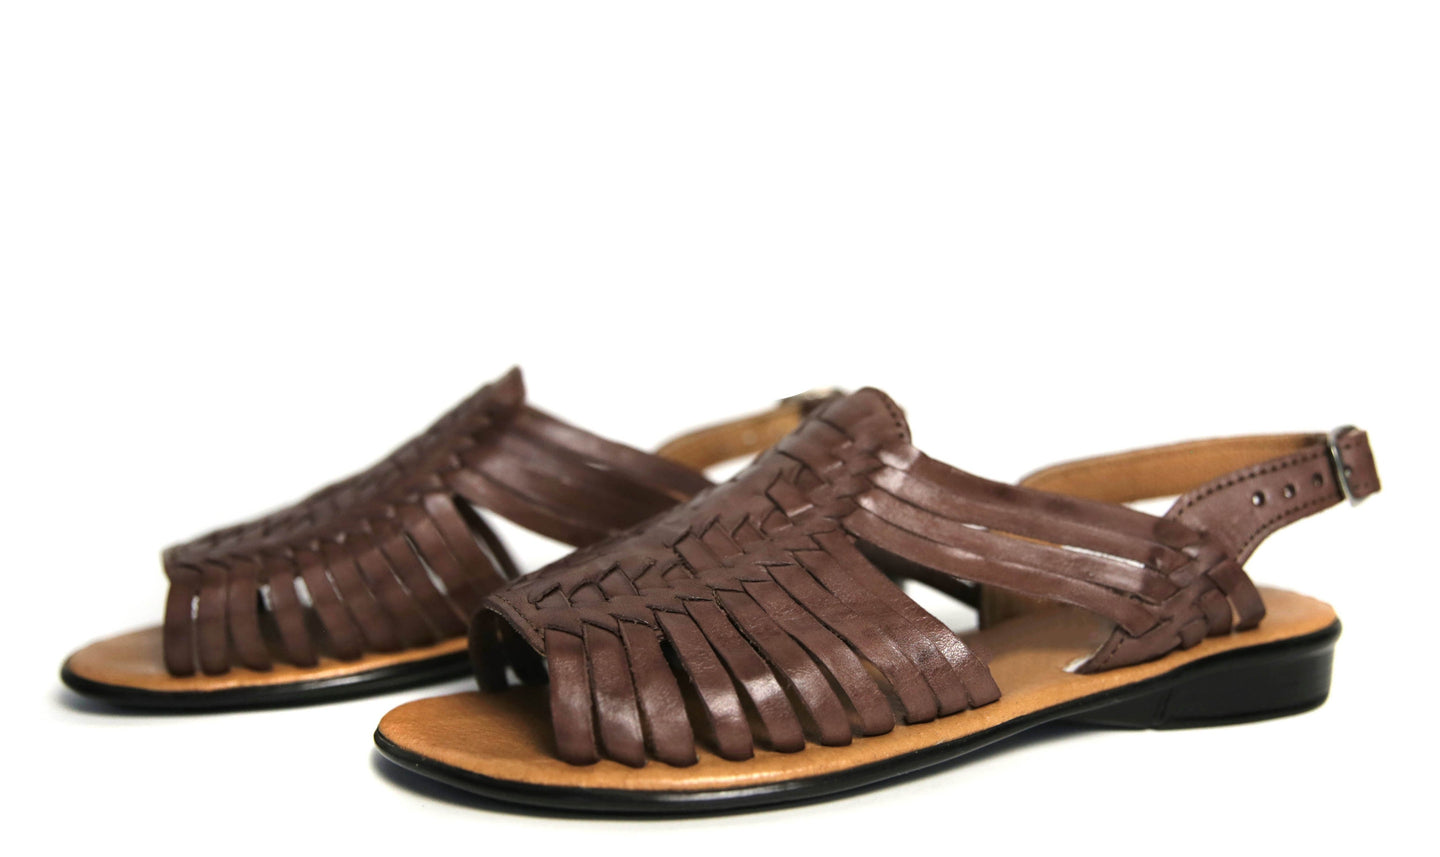 SIDREY Women's Mayo Mexican Huarache Sandals - Brown